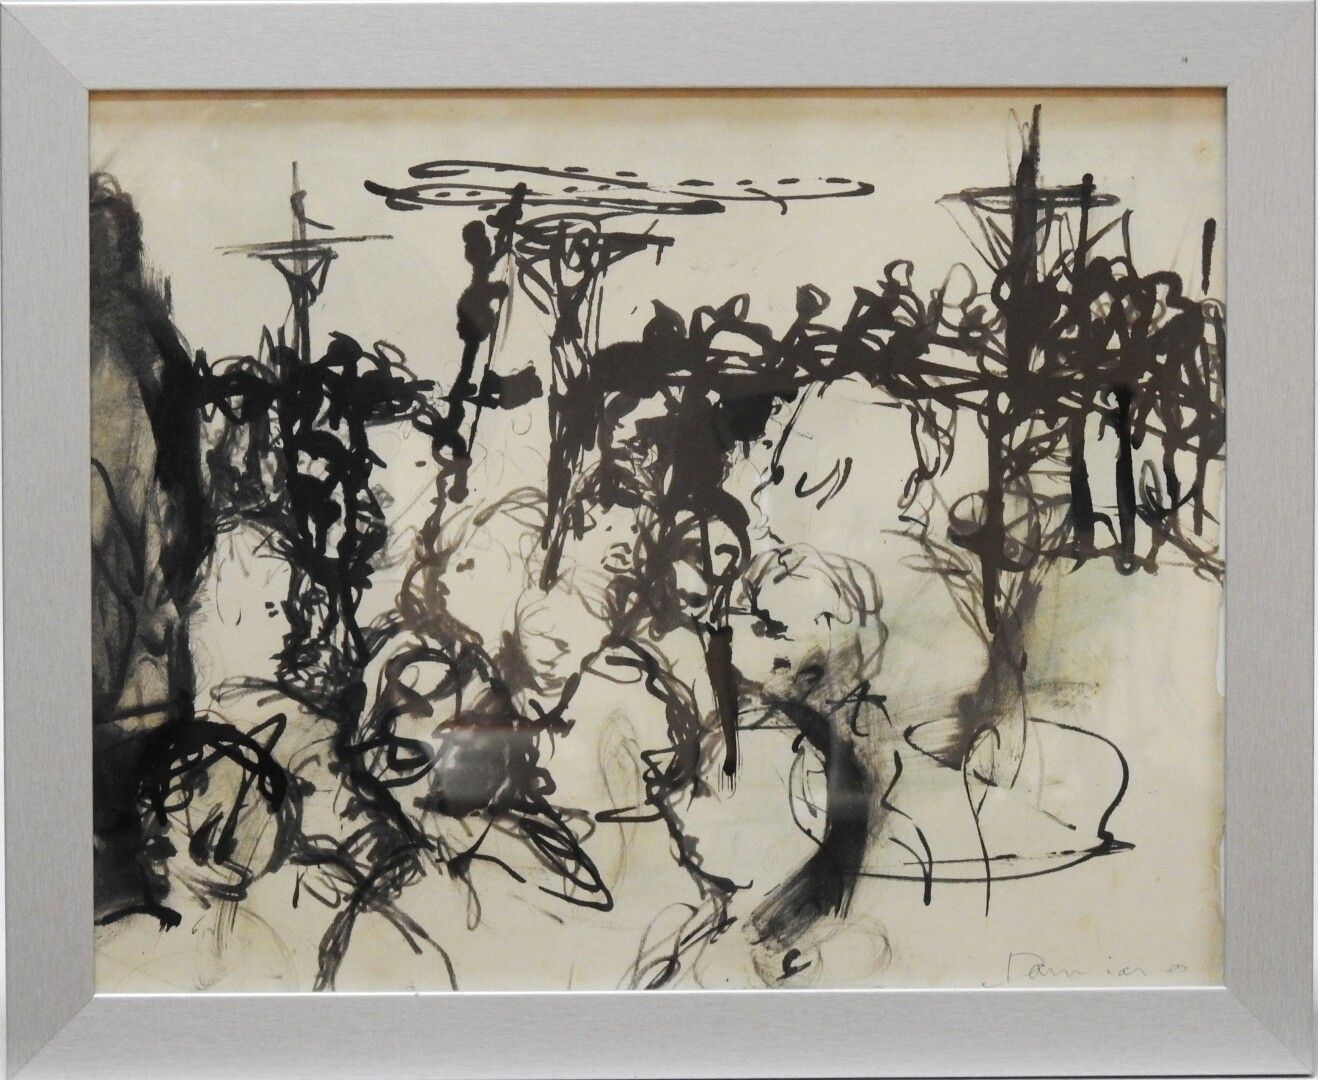 Null 伯纳德-达米亚诺 (1926 - 2000)

戈尔戈达

右下角有签名的水墨画

50 x 40 cm 正在展出